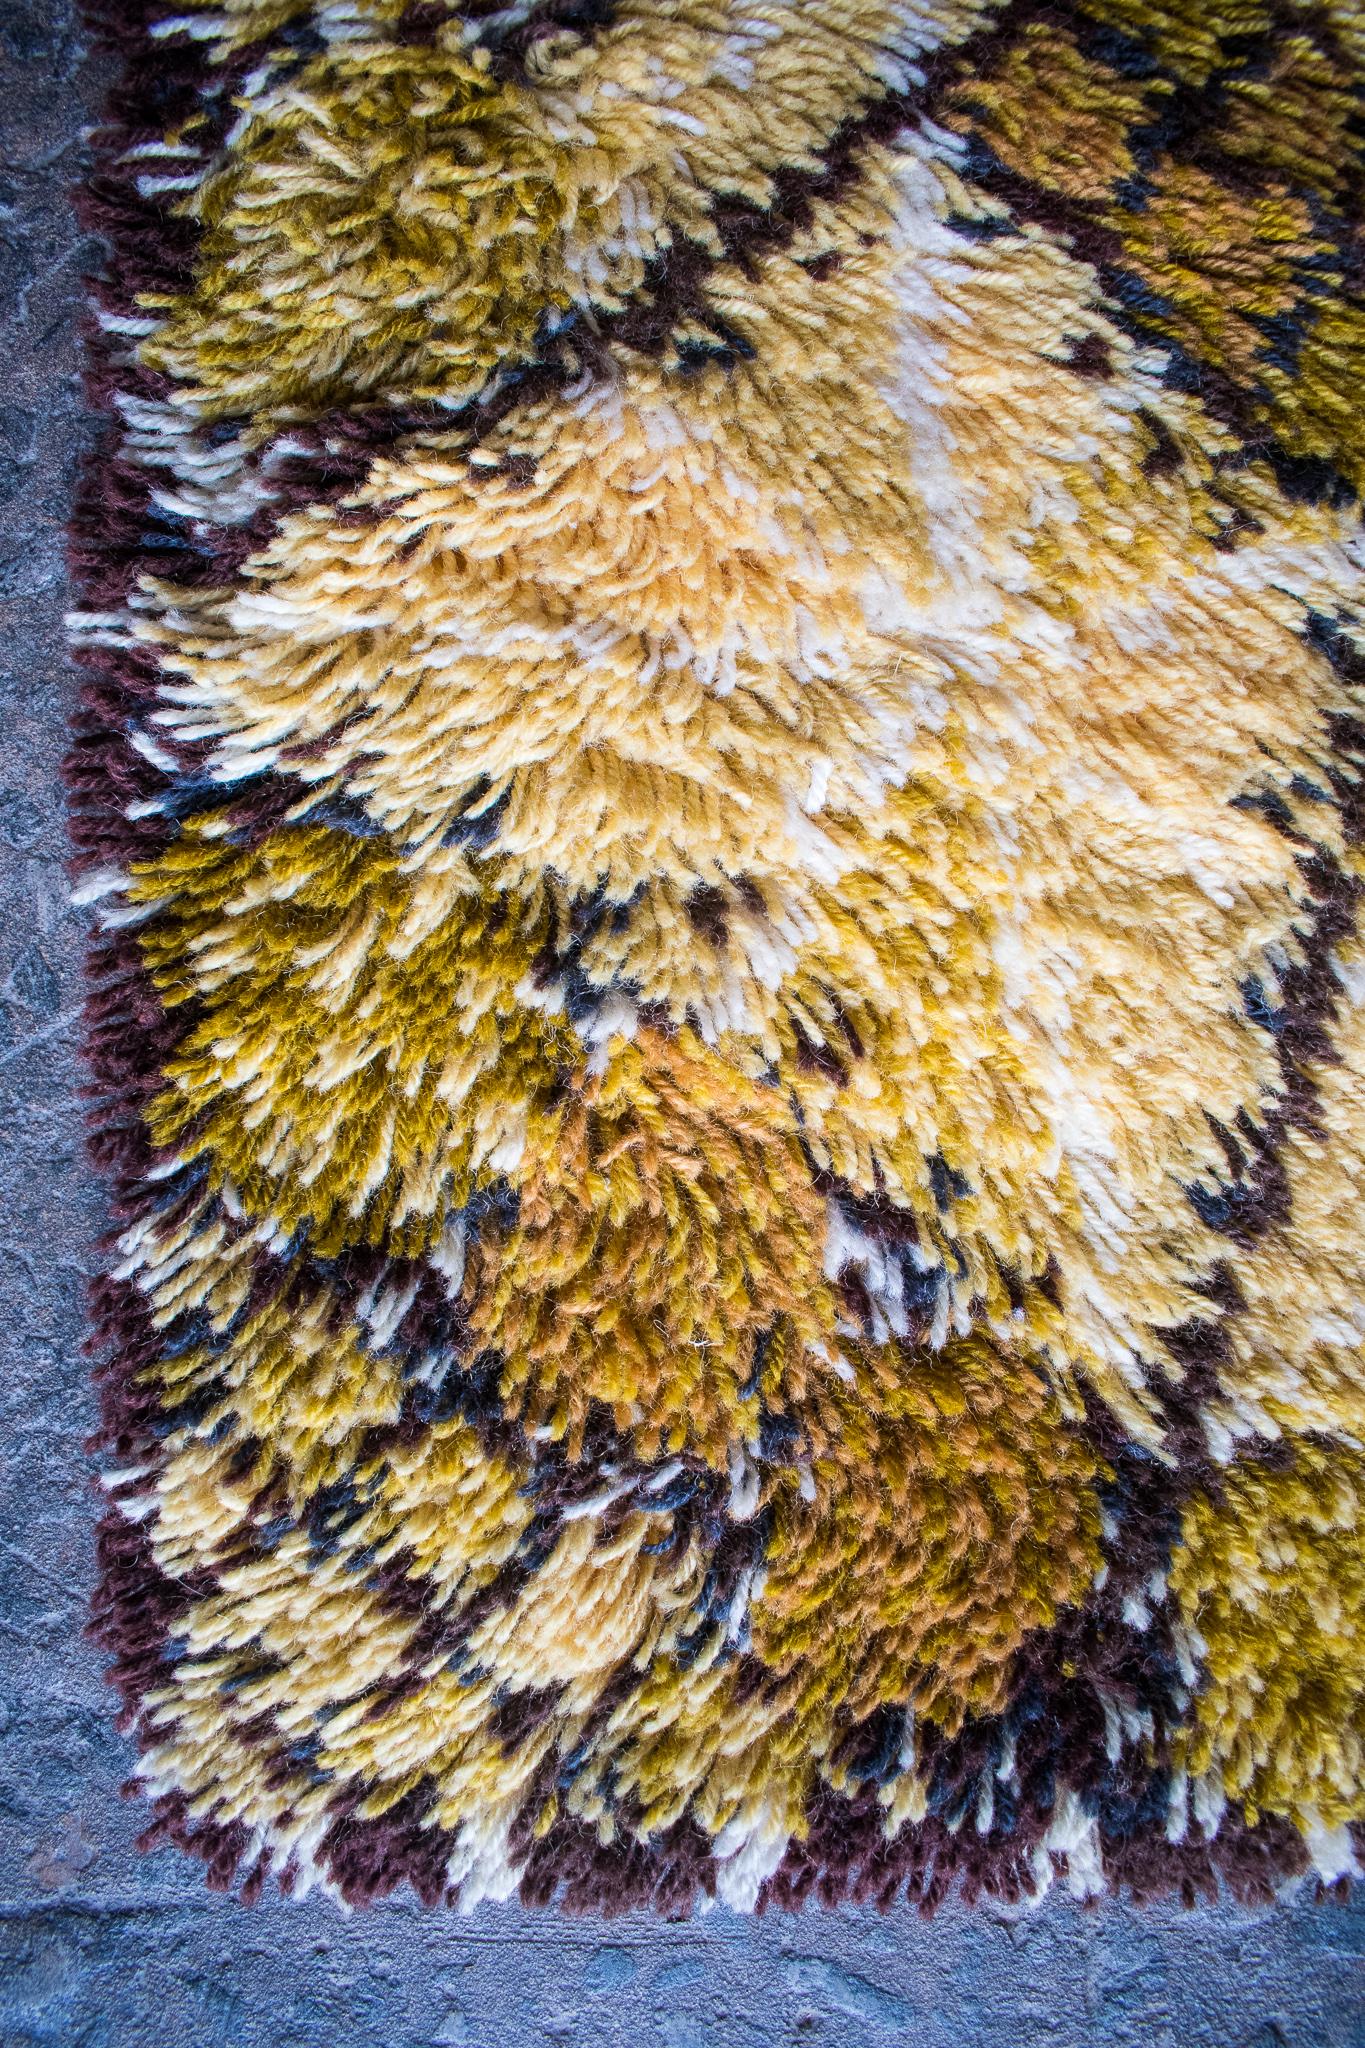 A warm-tone Rya rug by Swedish designer Marianne Richter in her 